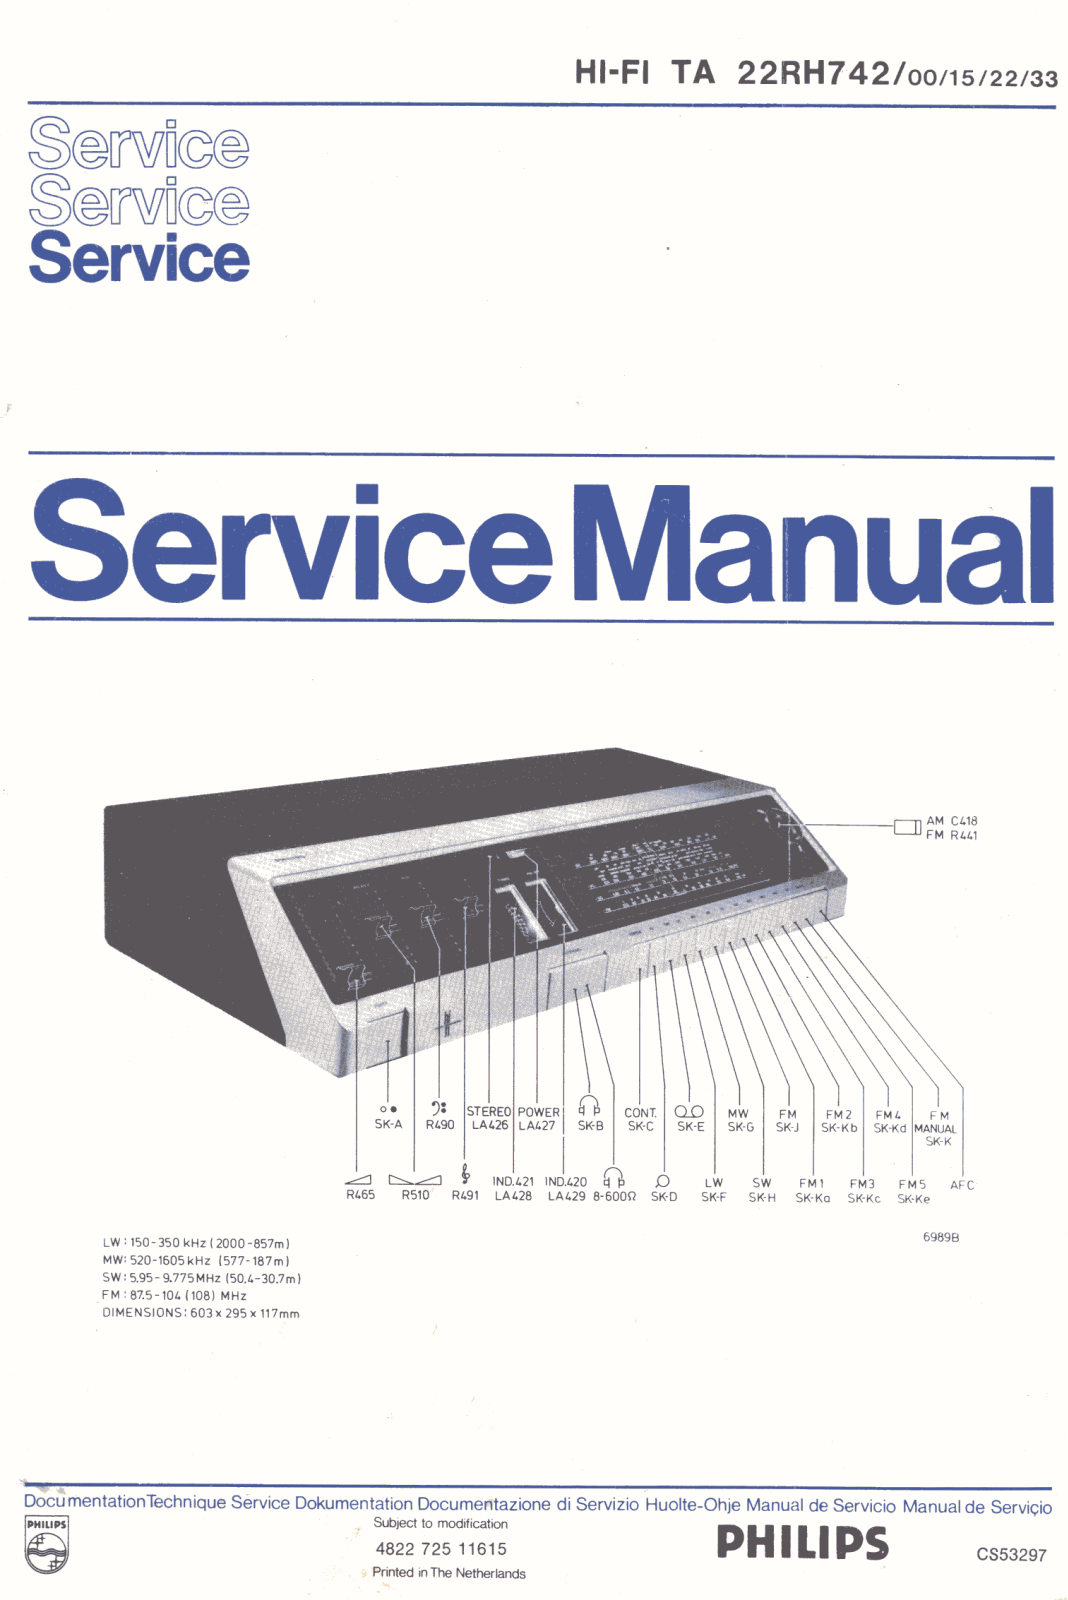 Philips 22-RH-742 Service Manual